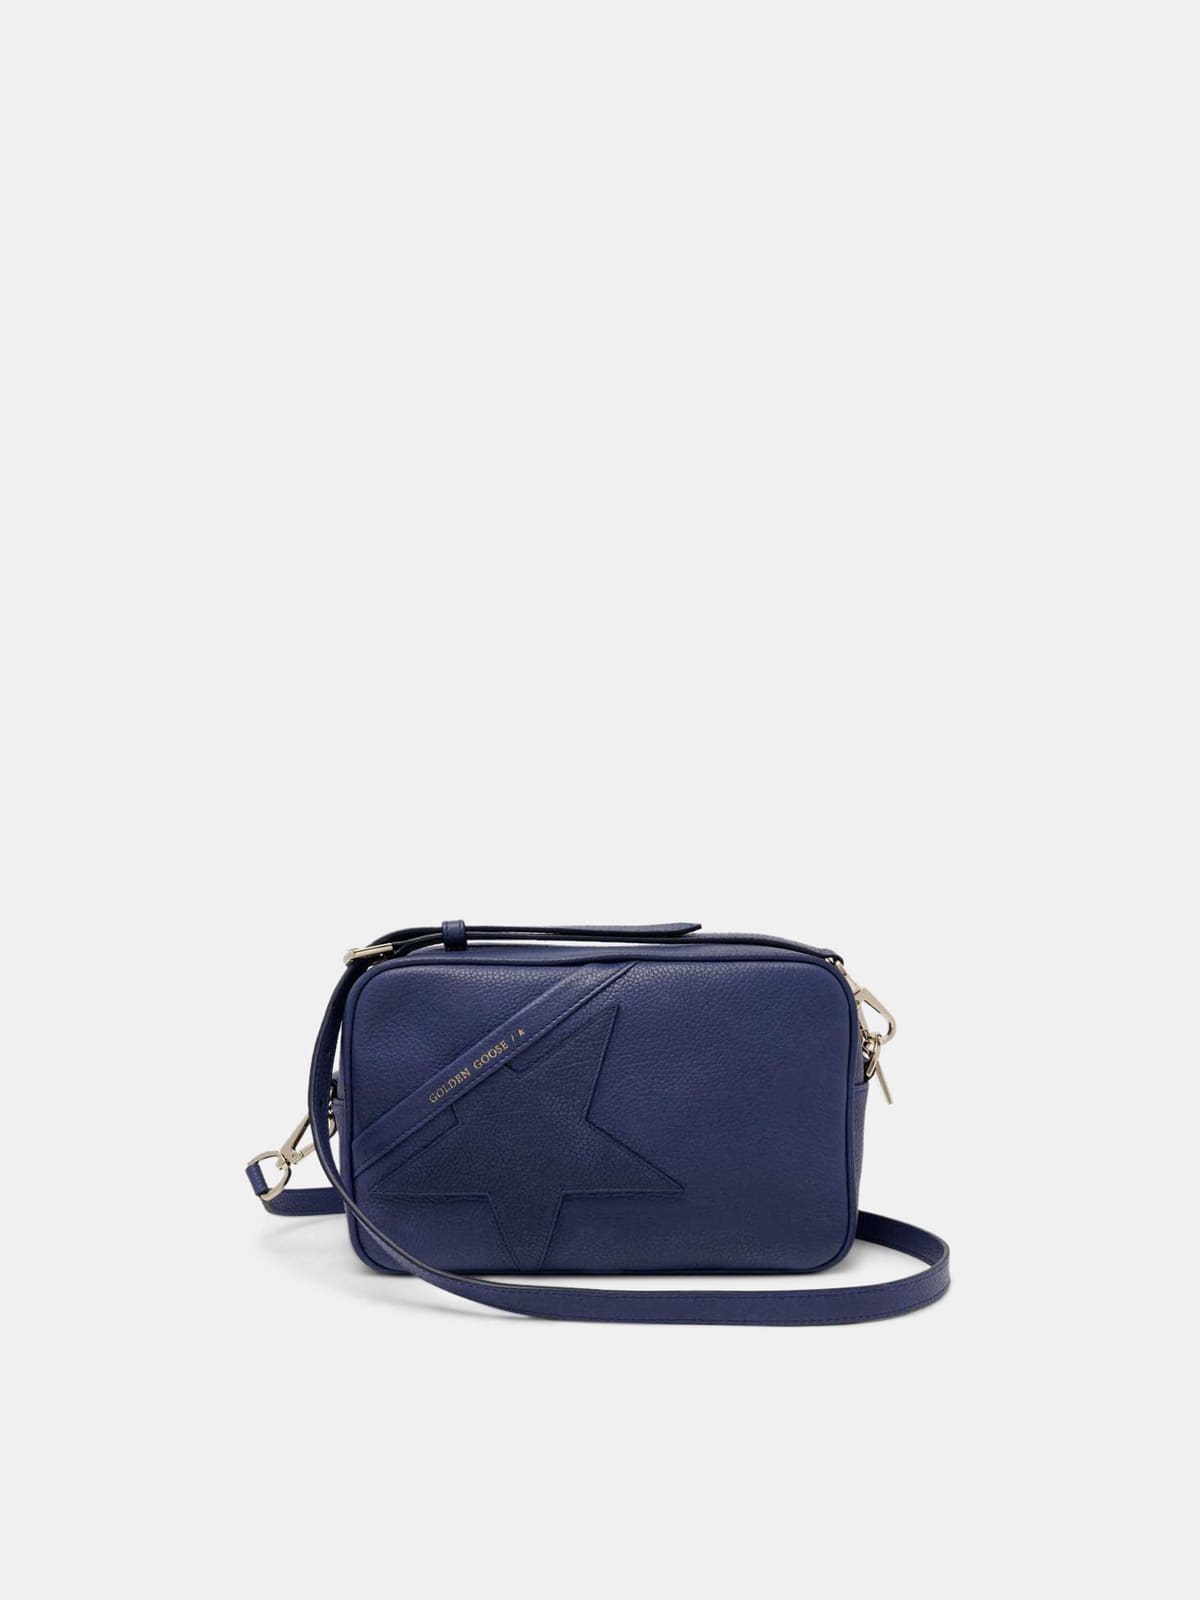 Blue Star Bag with shoulder strap made of pebbled leather